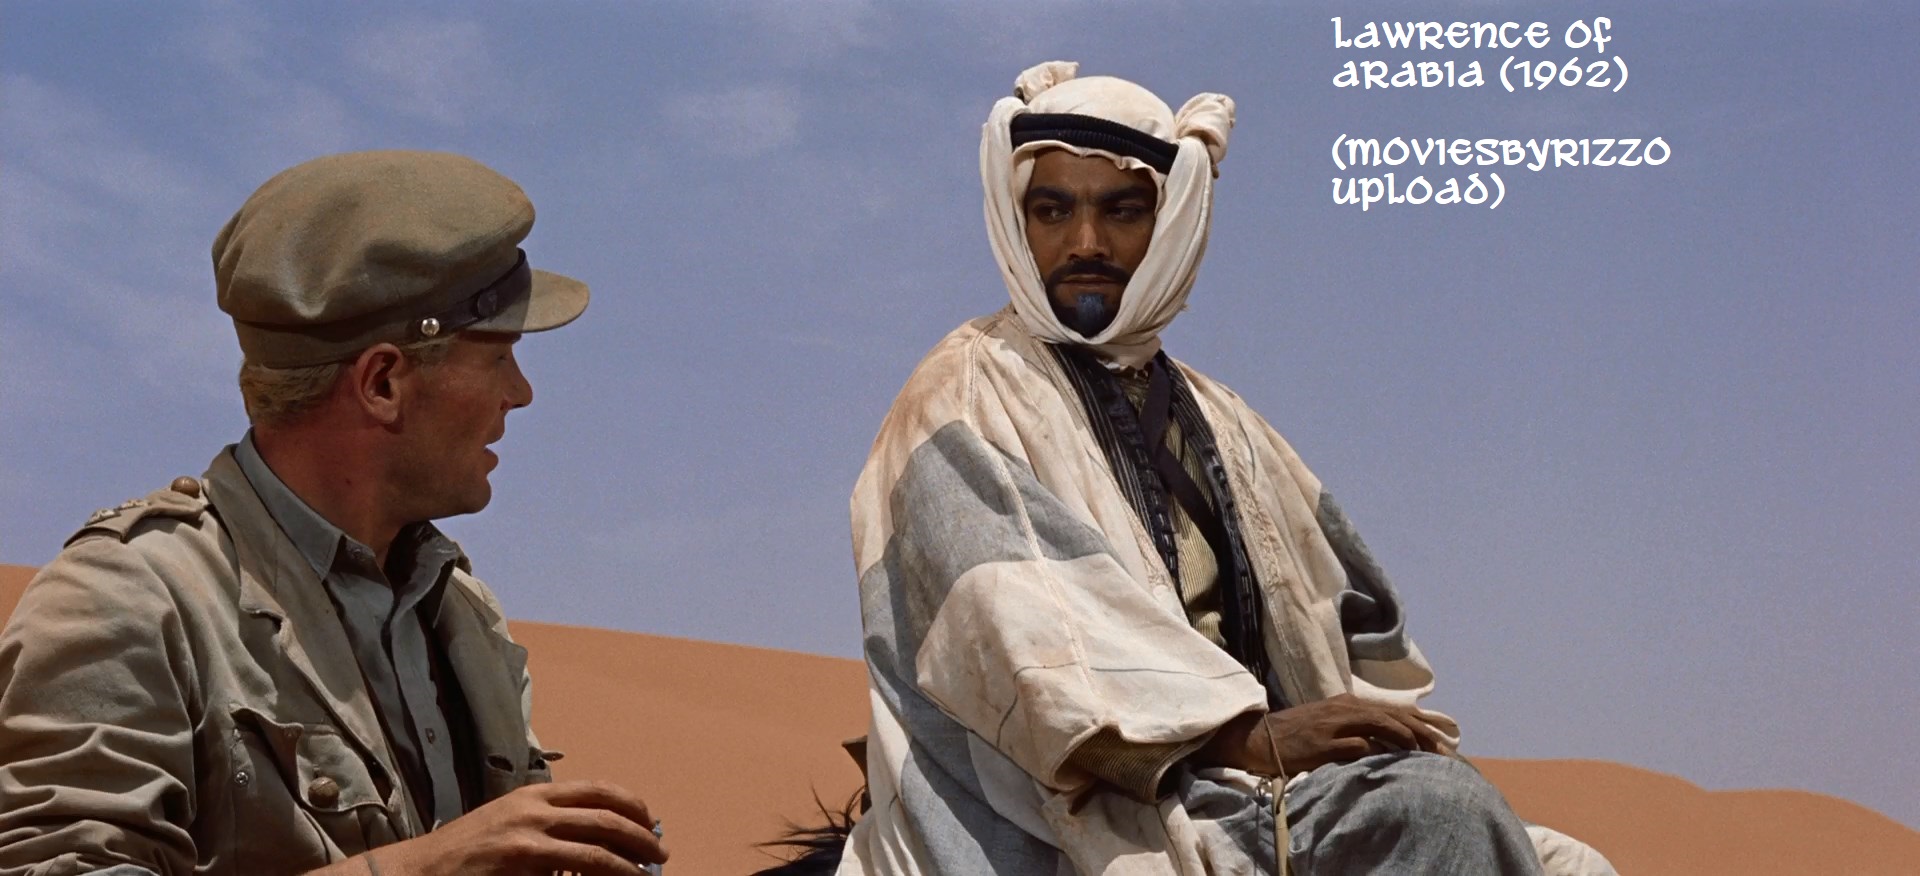 Lawrence of Arabia 1962 1080p H 264 34GB 2CD SDR Bluray DTS HD AC3 ENG ITA FRE moviesbyrizzo